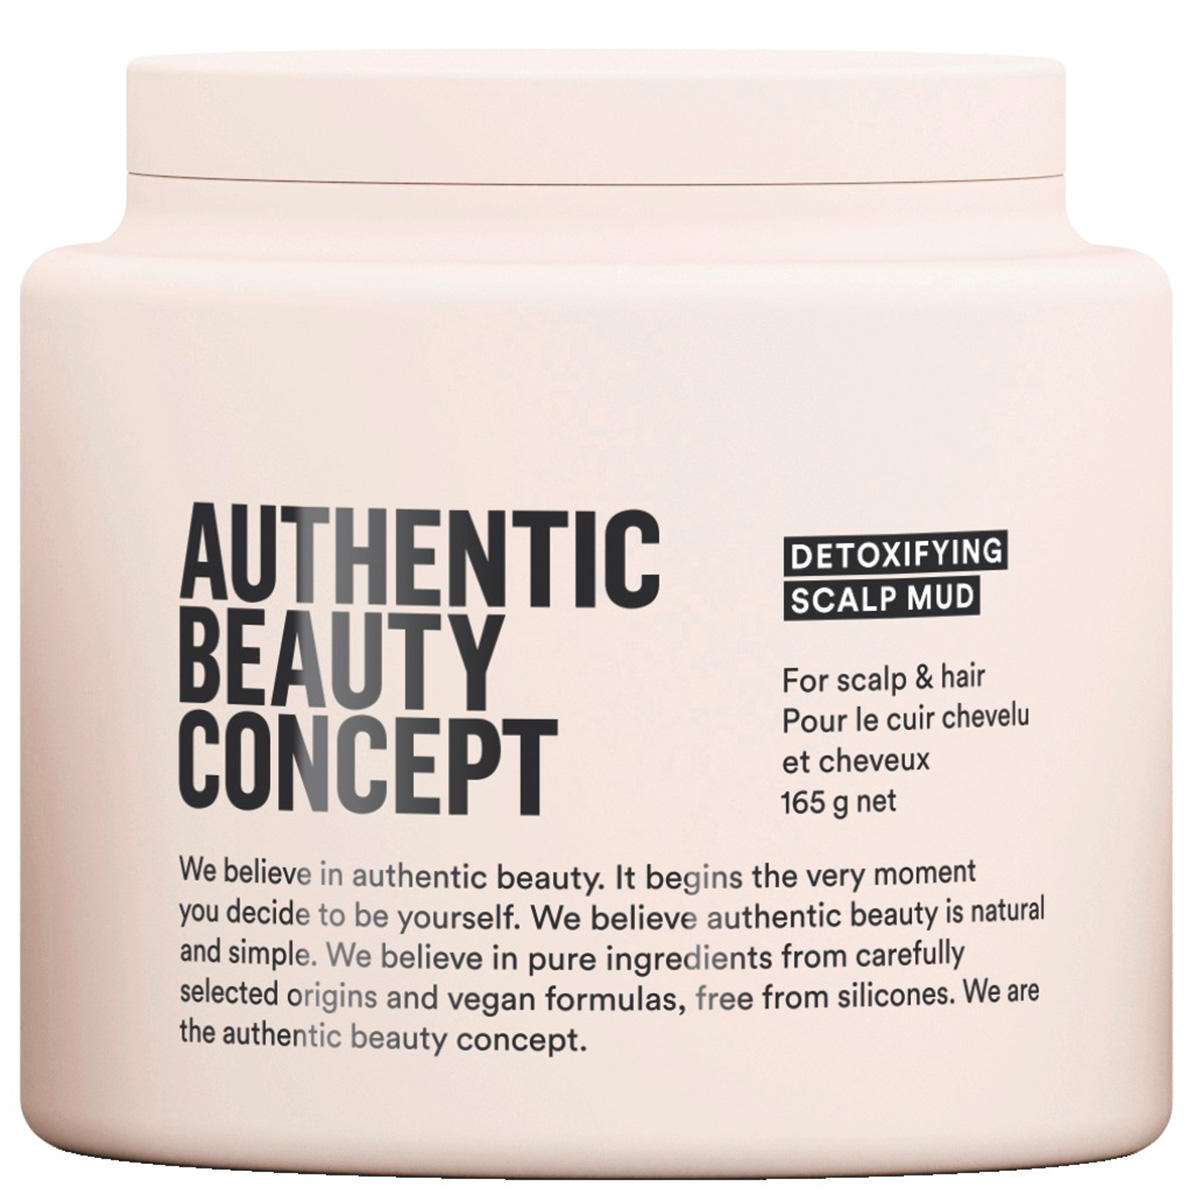 Authentic Beauty Concept Detoxifying Scalp Mud 165 g - 1